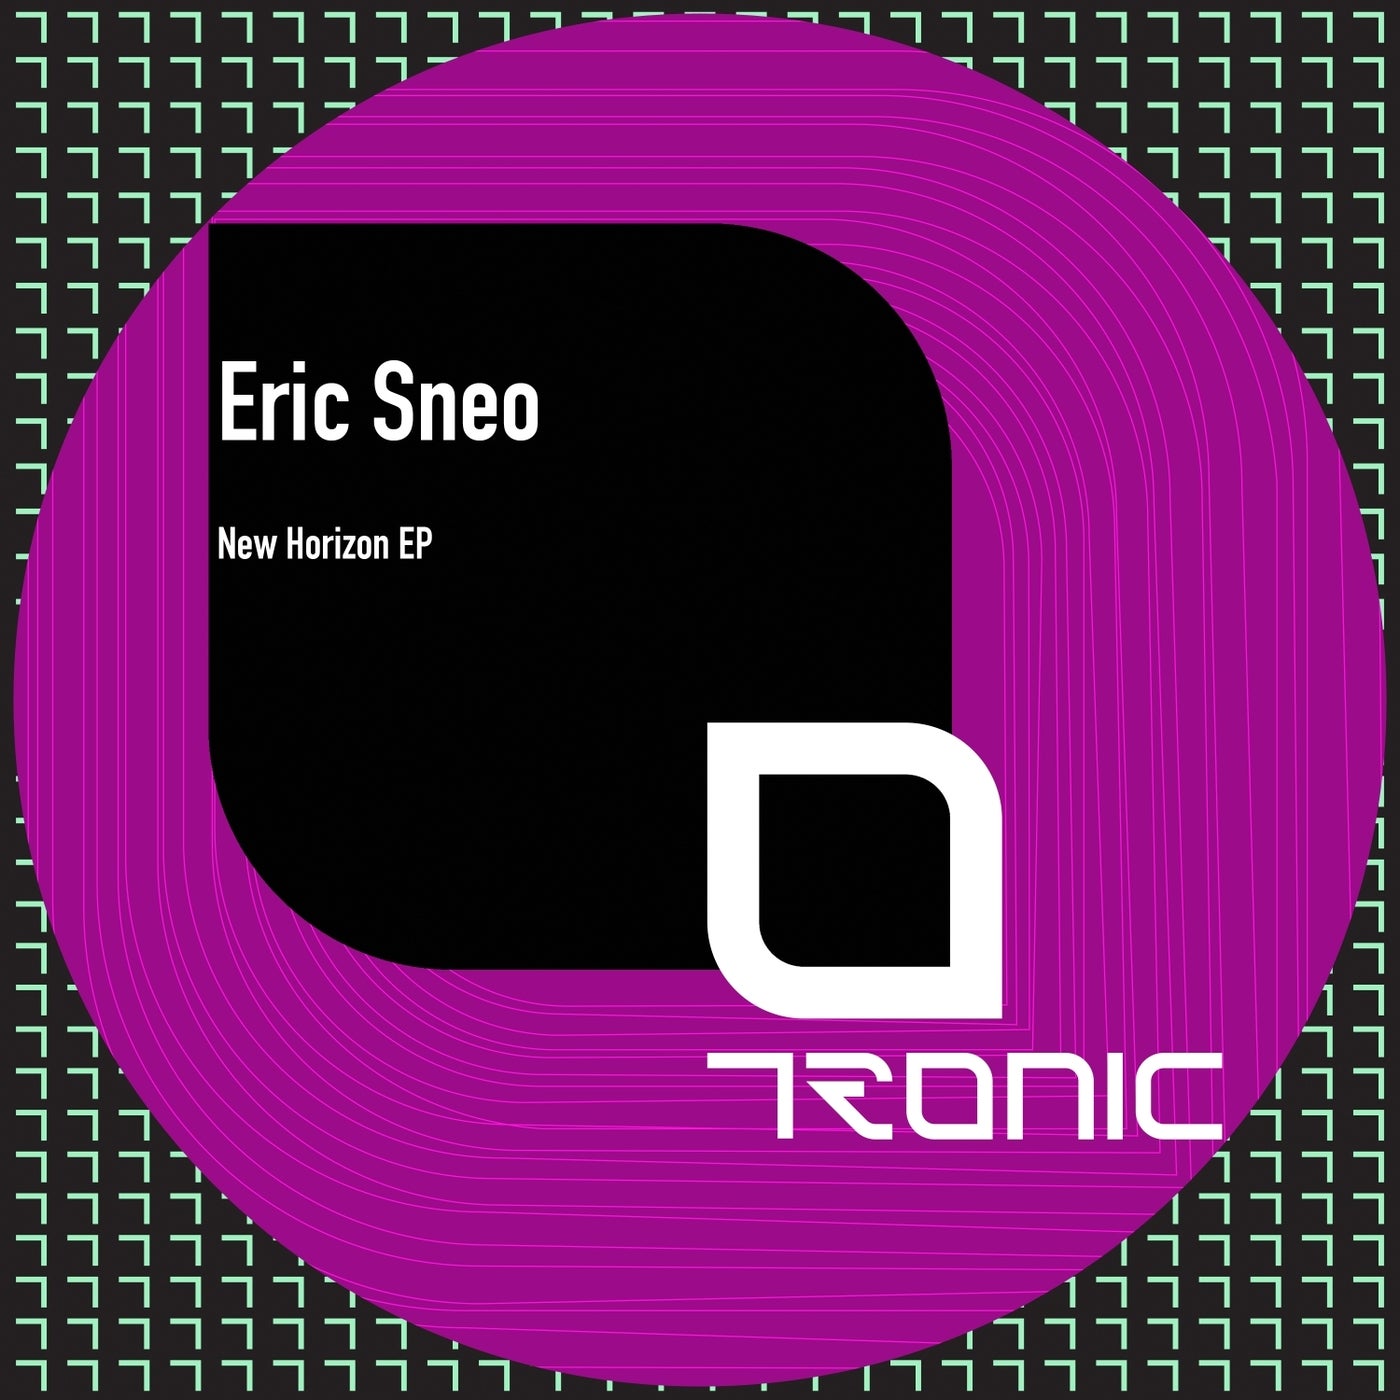 image cover: Eric Sneo - New Horizon EP on Tronic